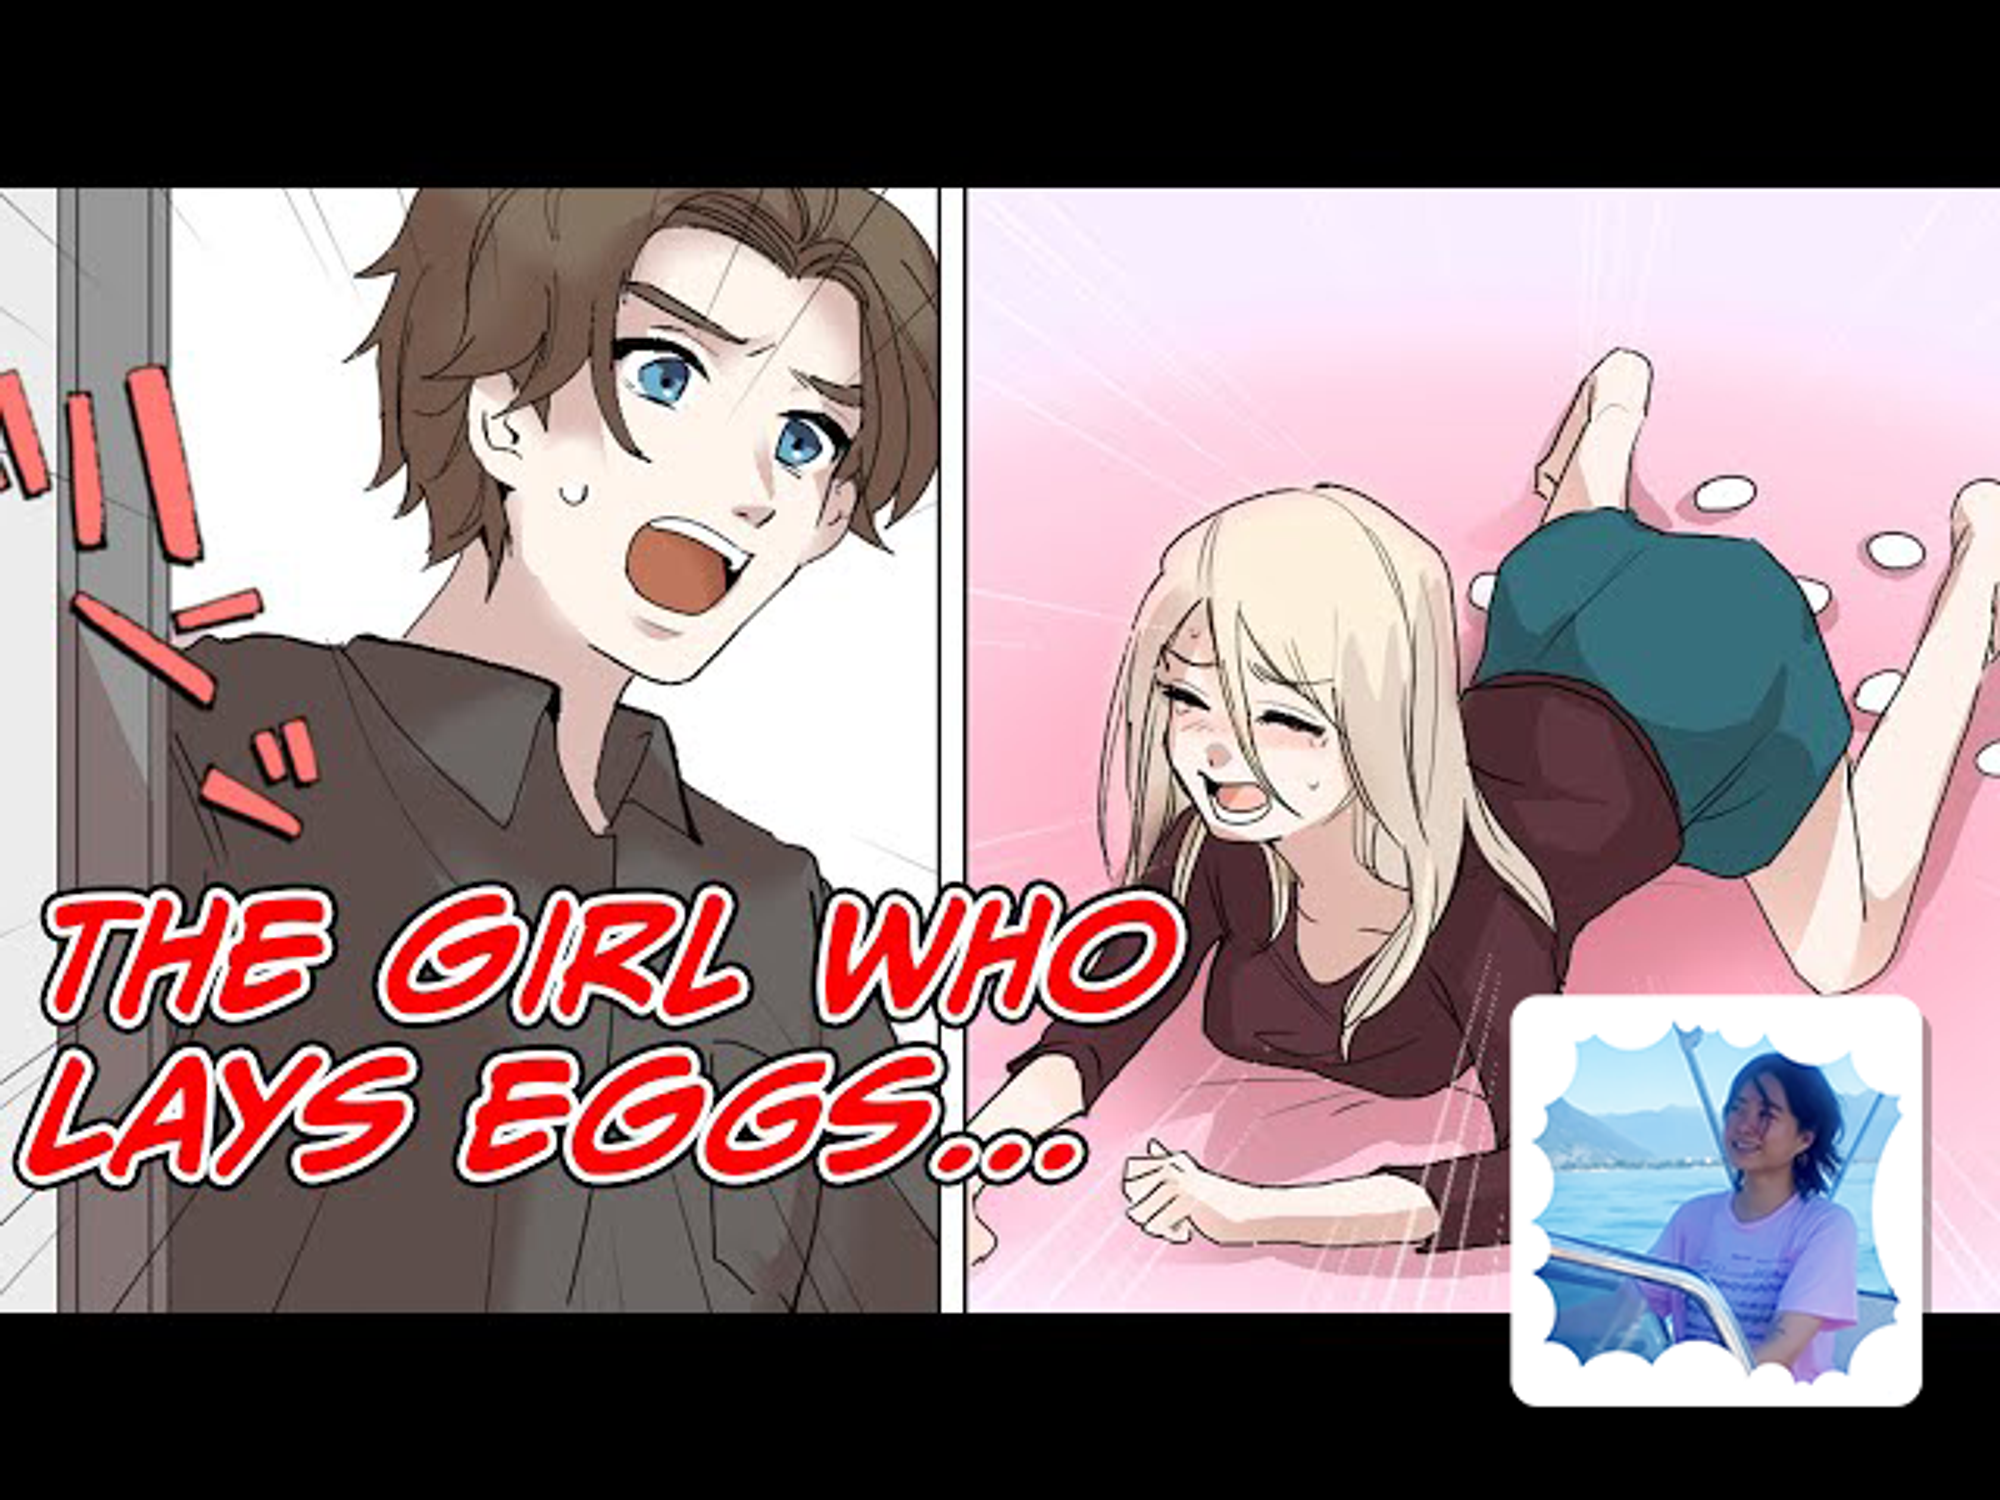 A manga girl laying eggs